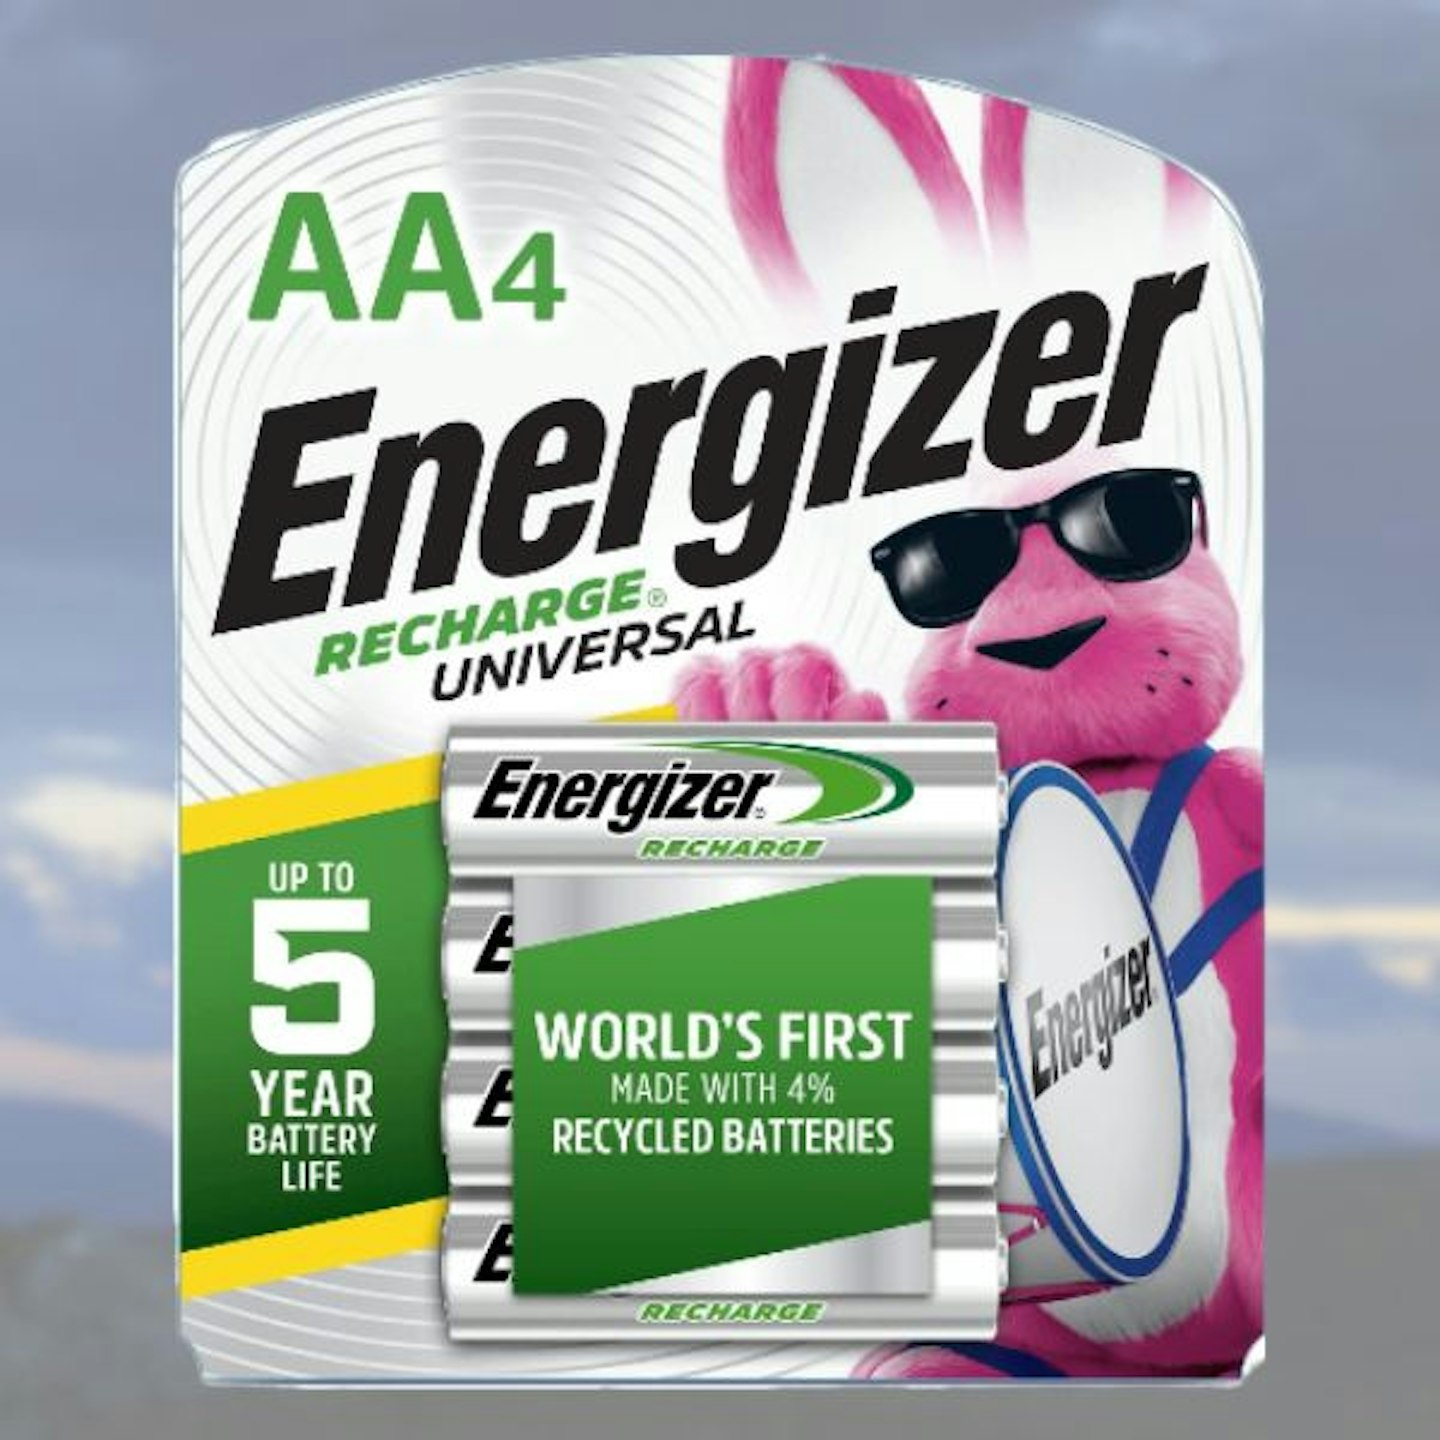 Energizer Recharge Universal AA batteries